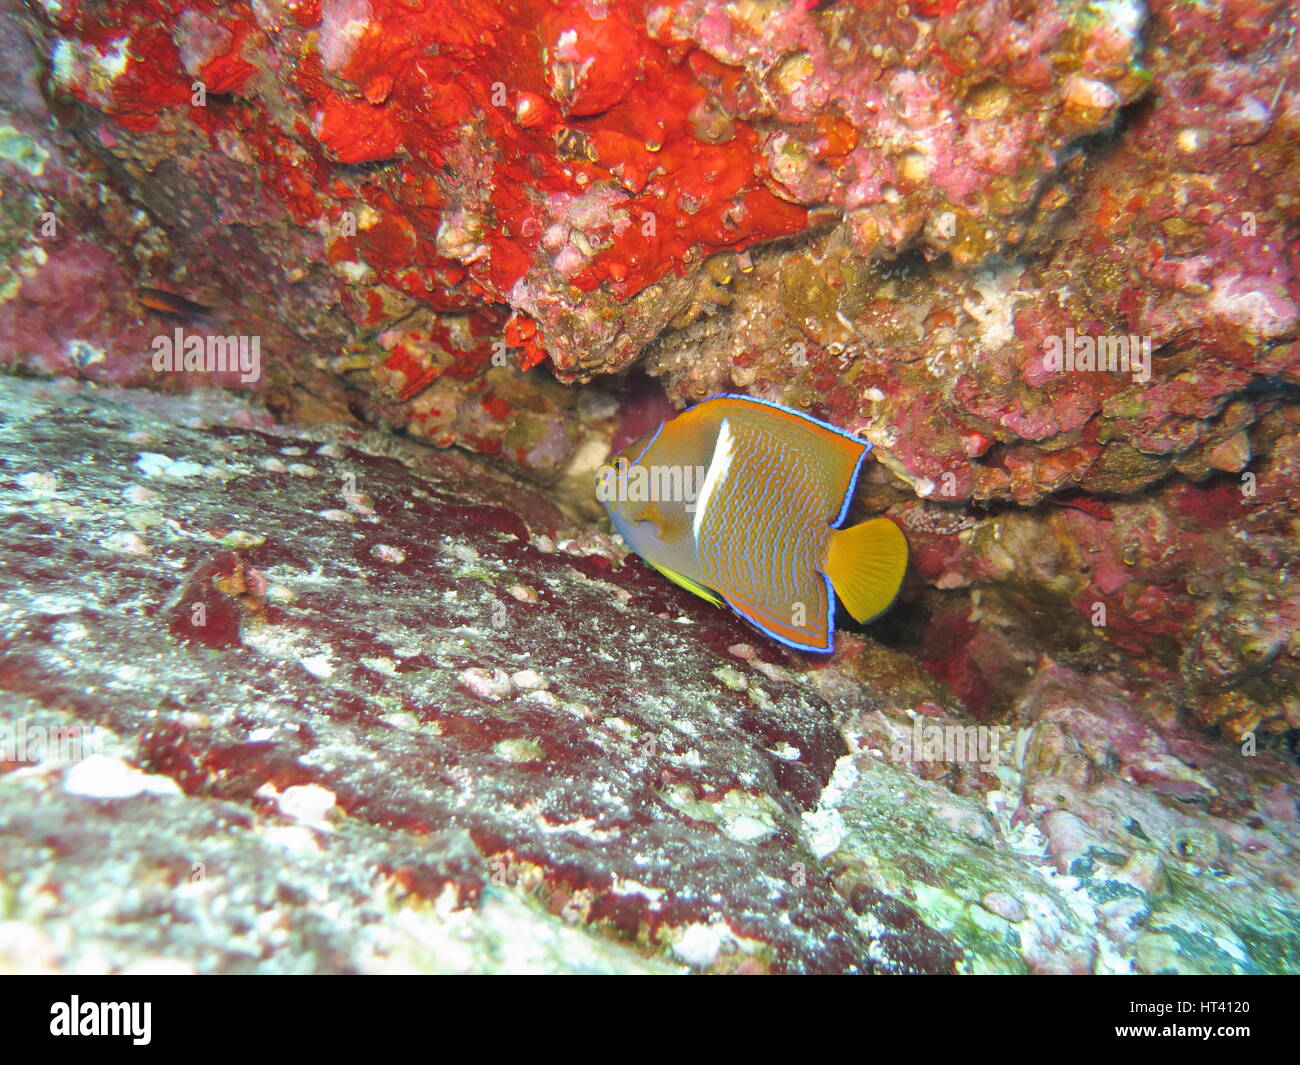 King angelfish or passer angelfish ( Holacanthus passer ), Cocos island Stock Photo